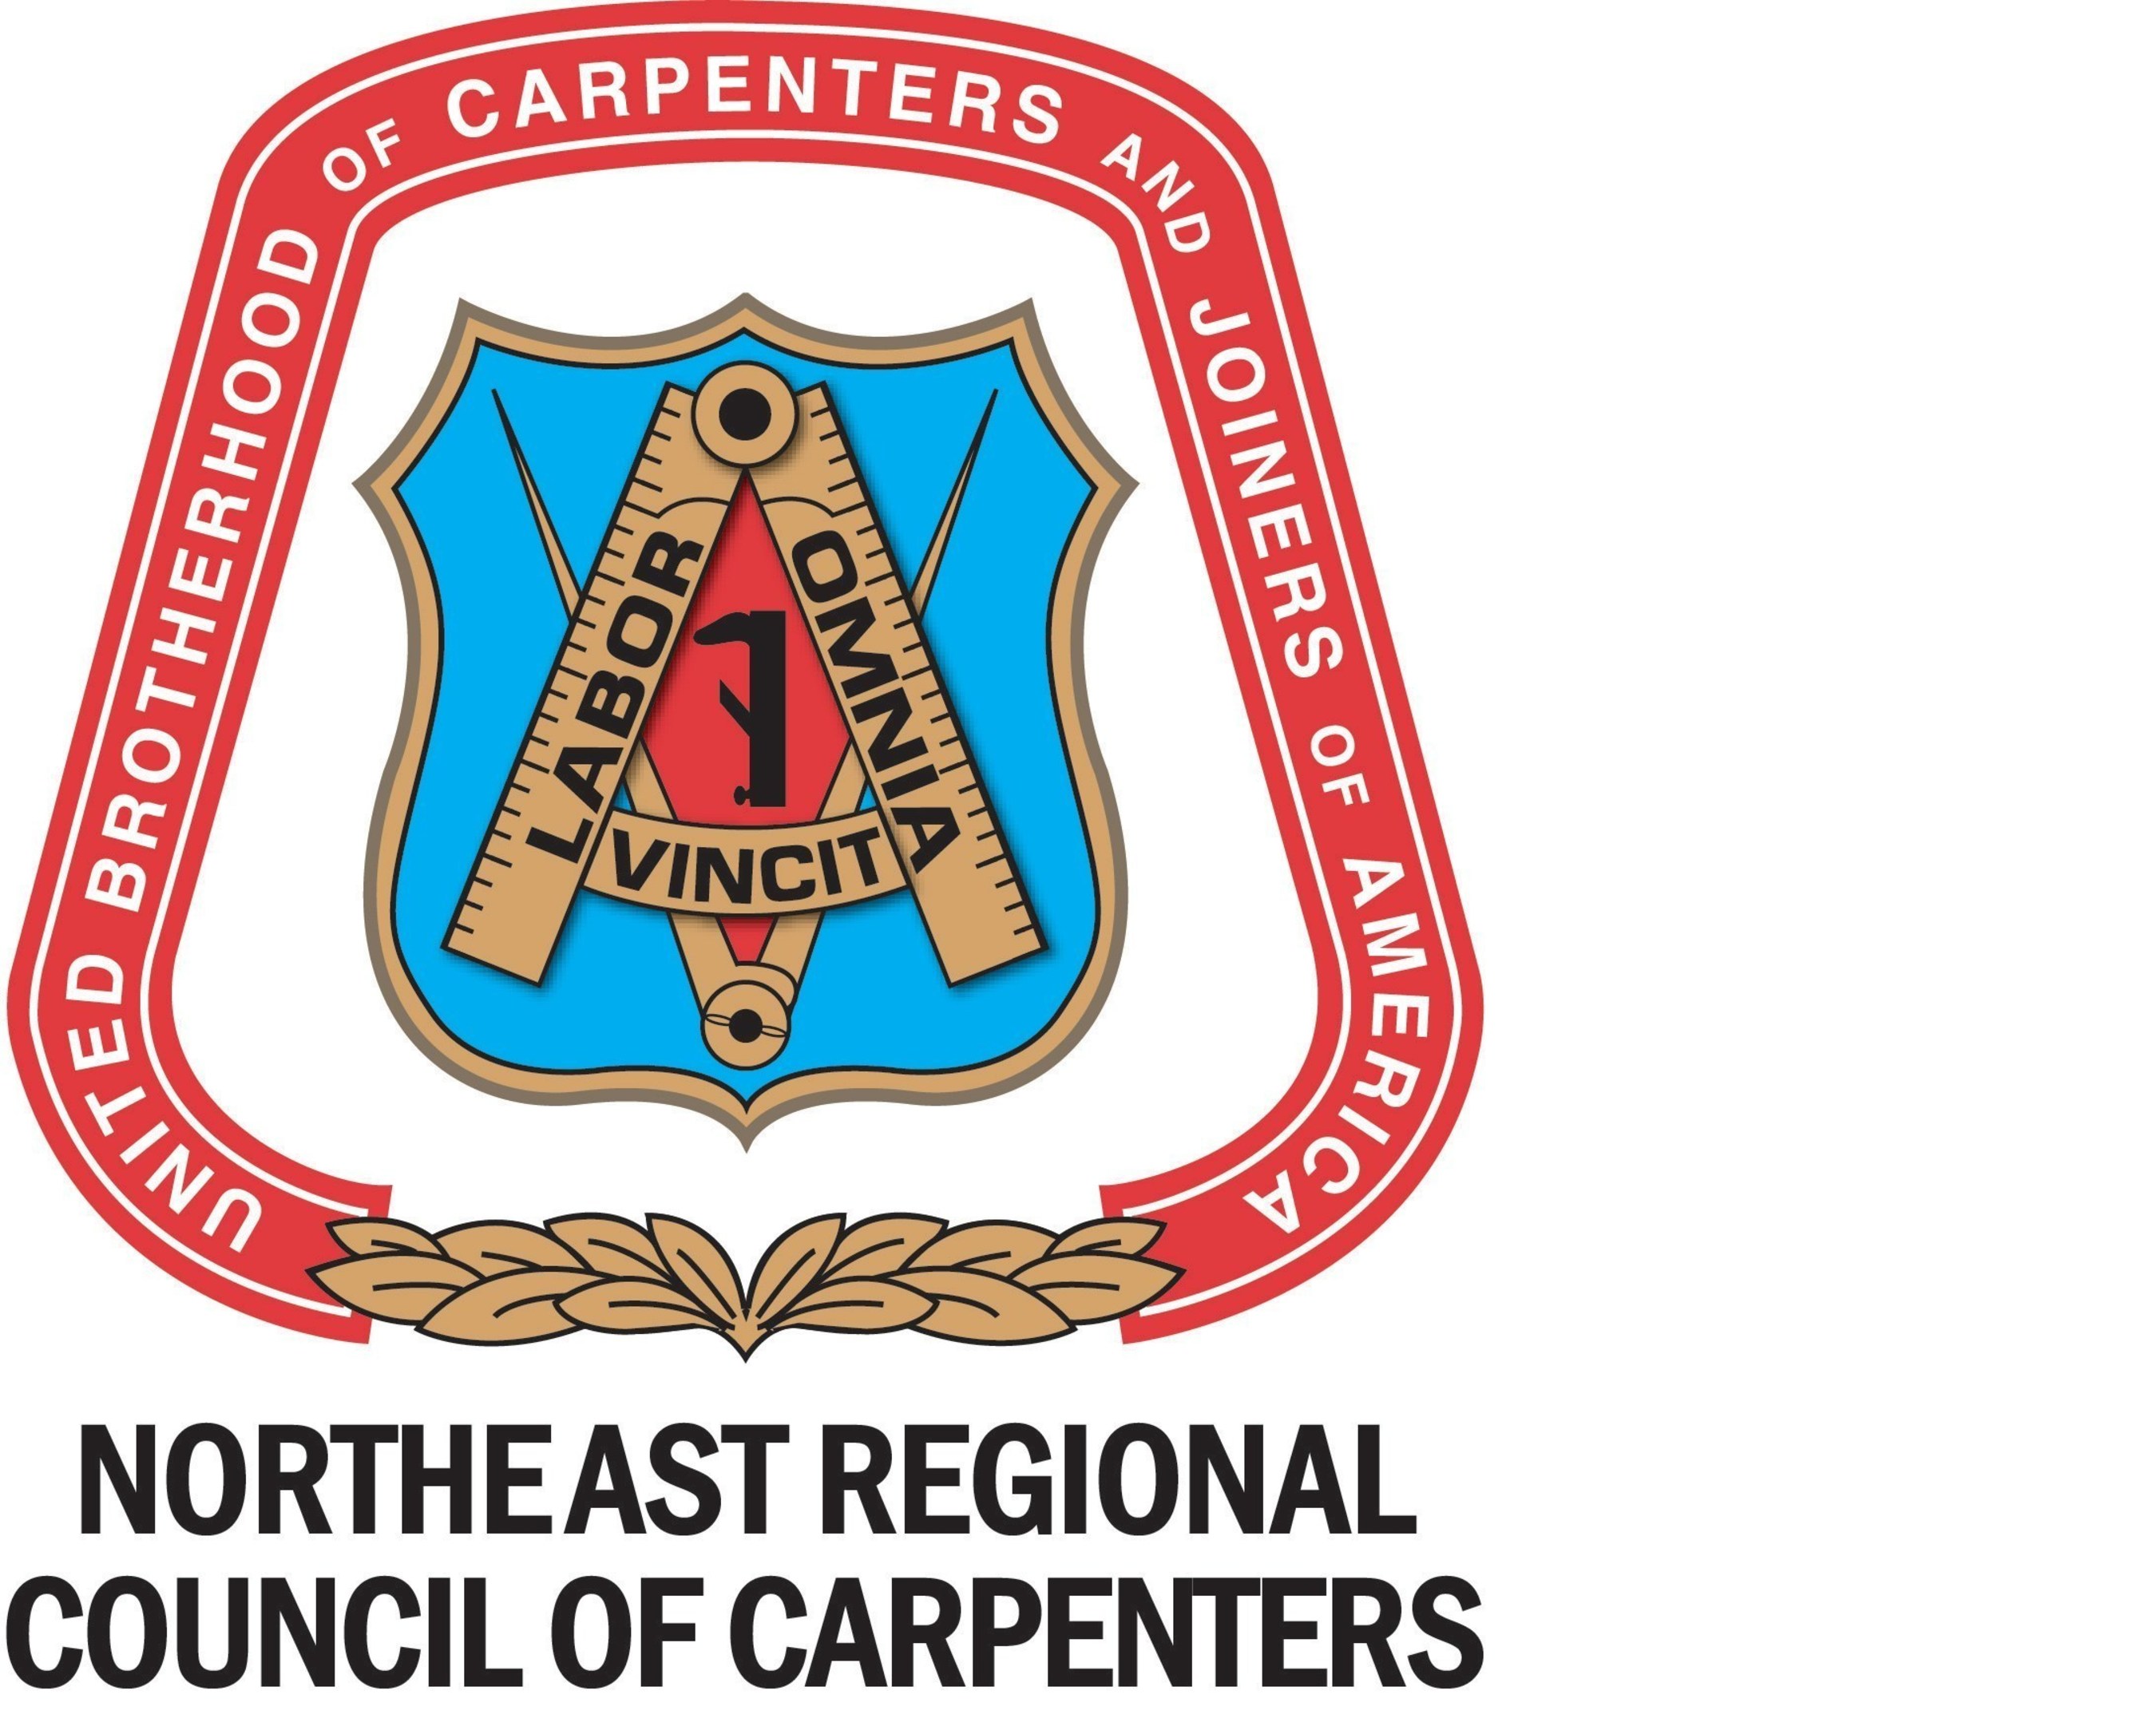 Metropolitan Regional Council Of Carpenters Merges Into The Northeast Regional Council Of Carpenters To Expand Council S Jurisdiction